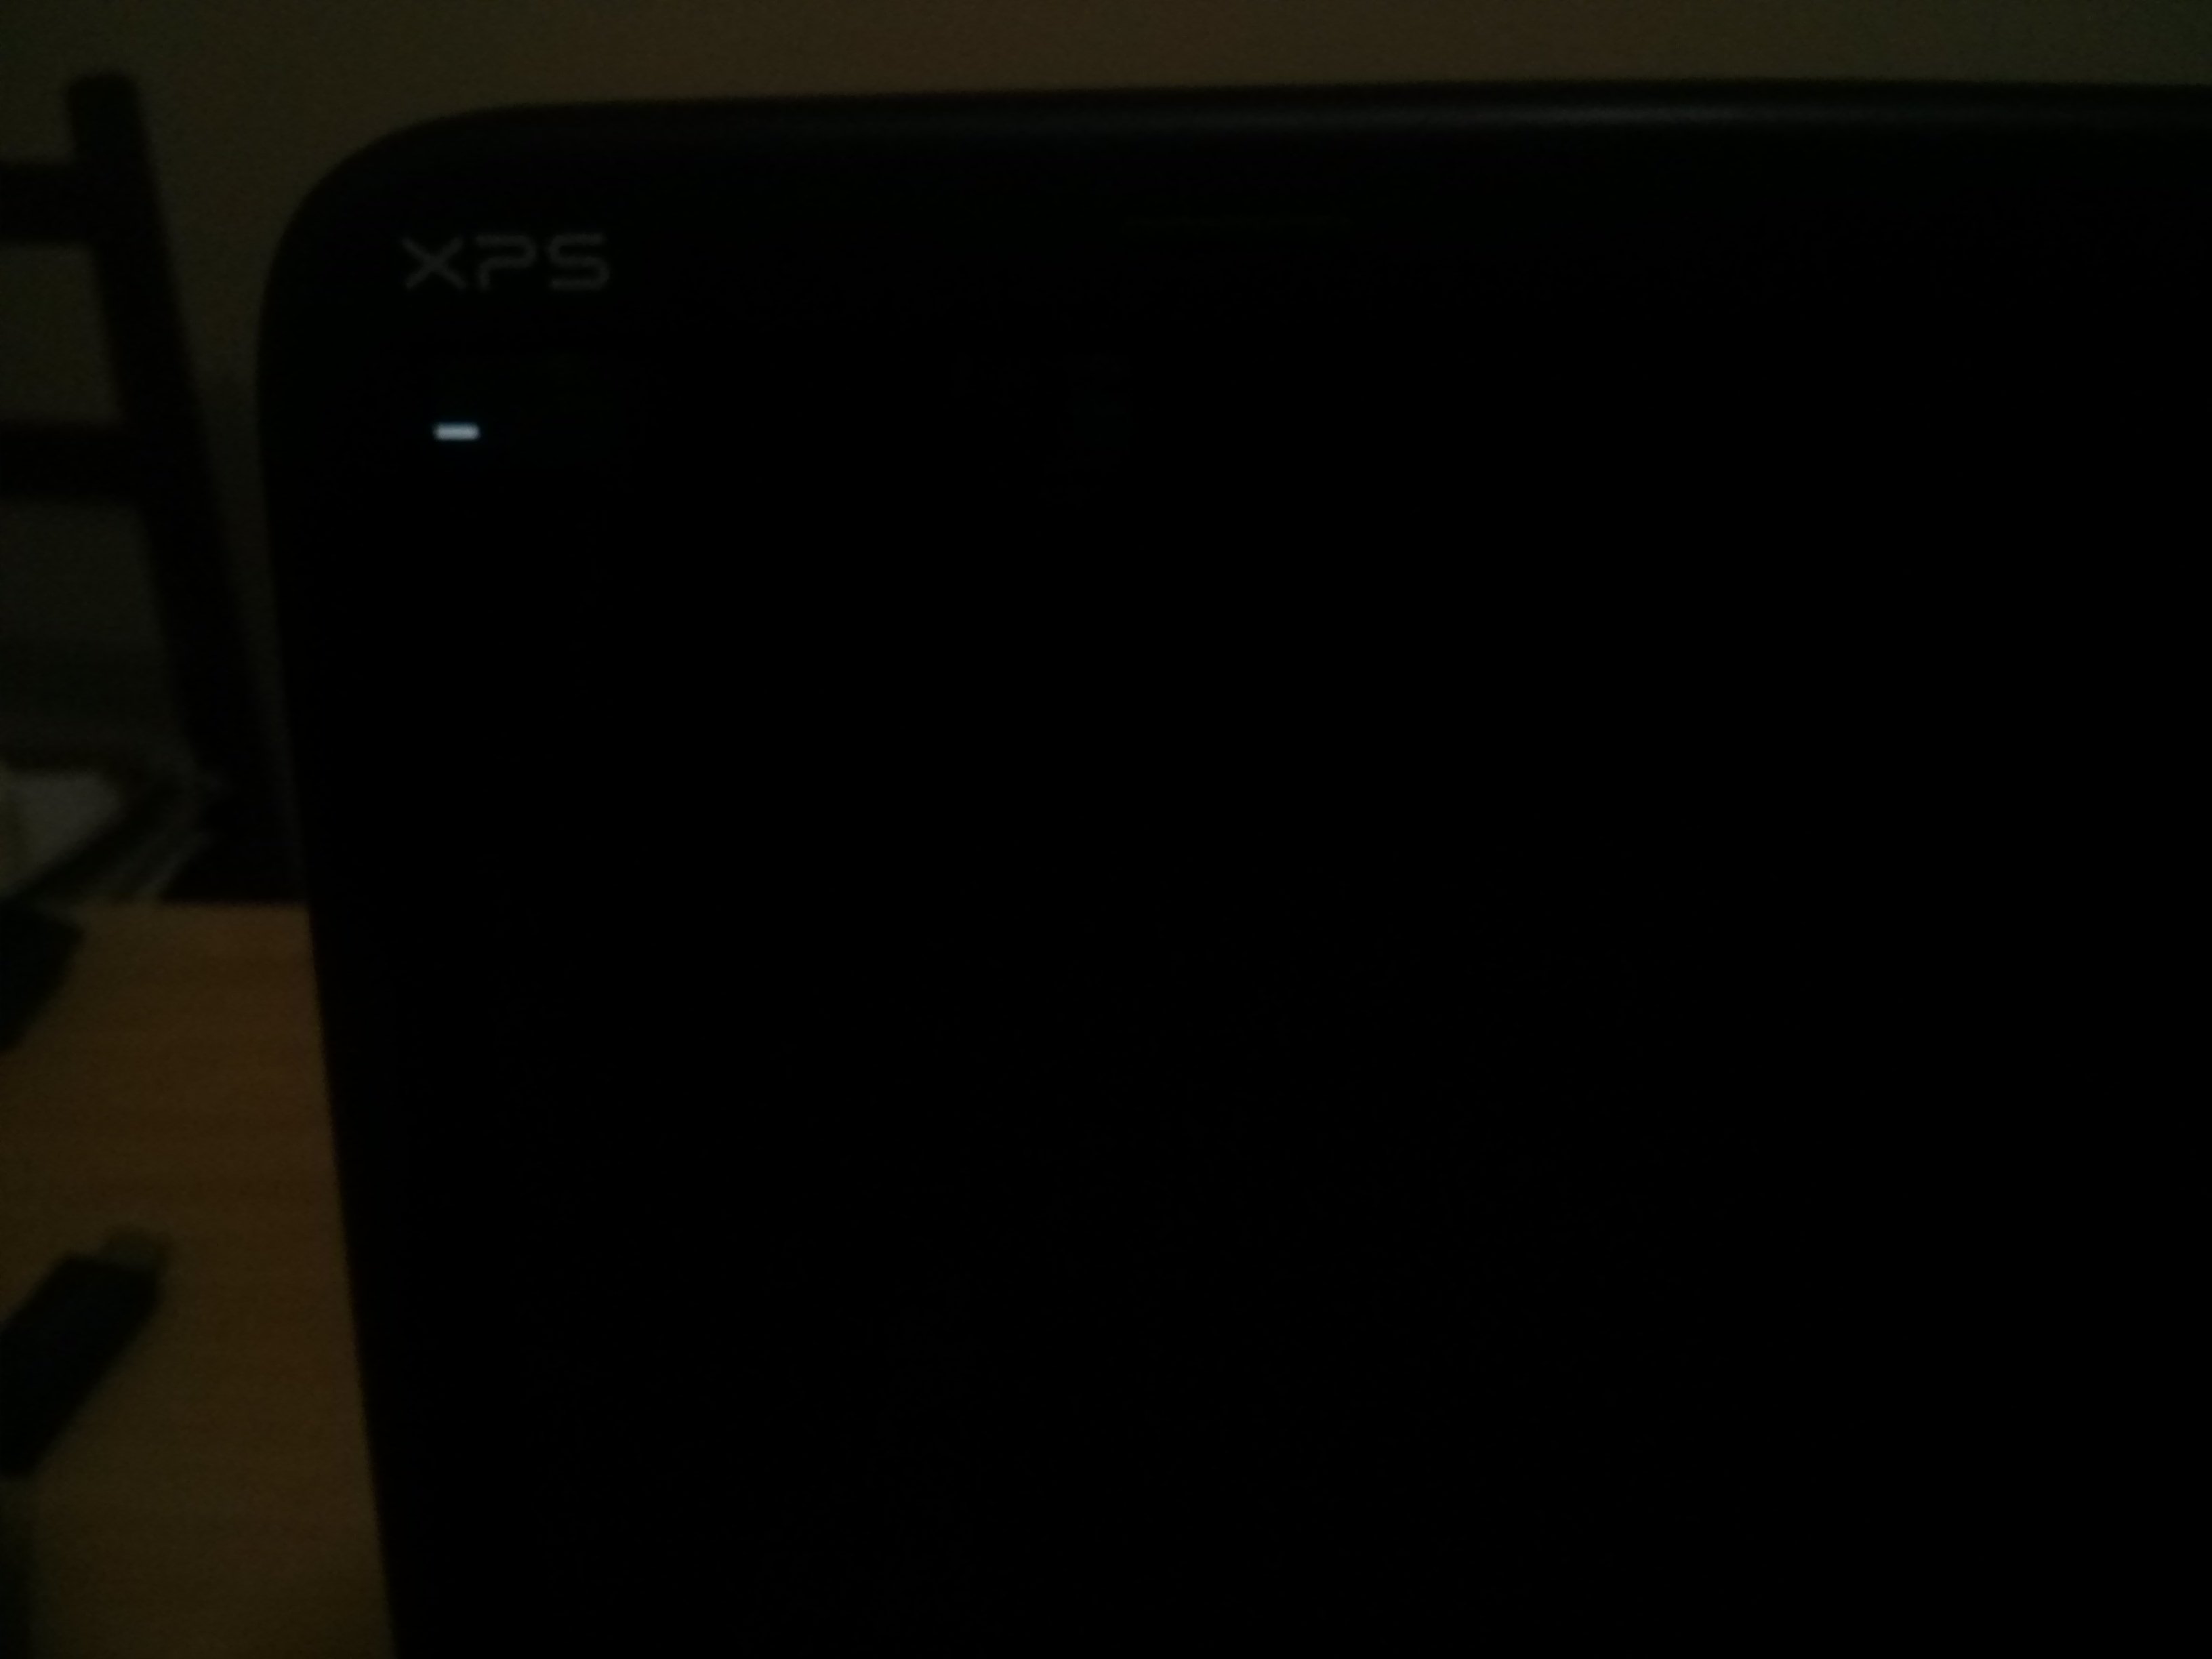 Dell XPS nâo inicializa. Tela preta com tracinho piscando | DELL  Technologies